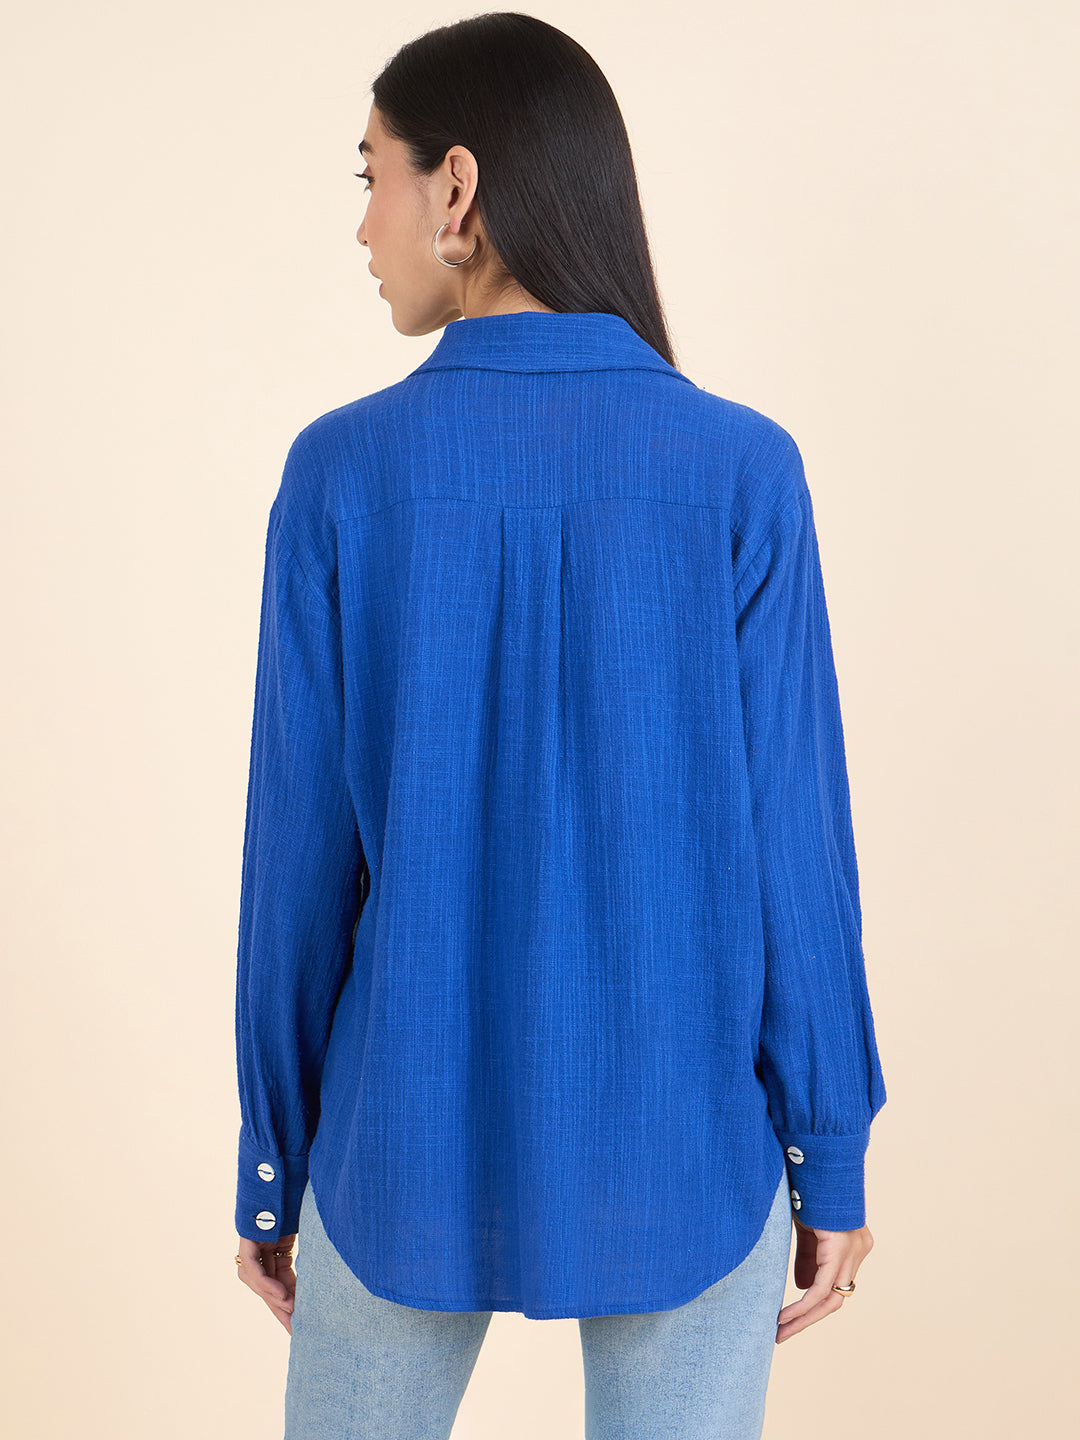 Gipsy Stylish Women Shirts Collection Cobalt Blue